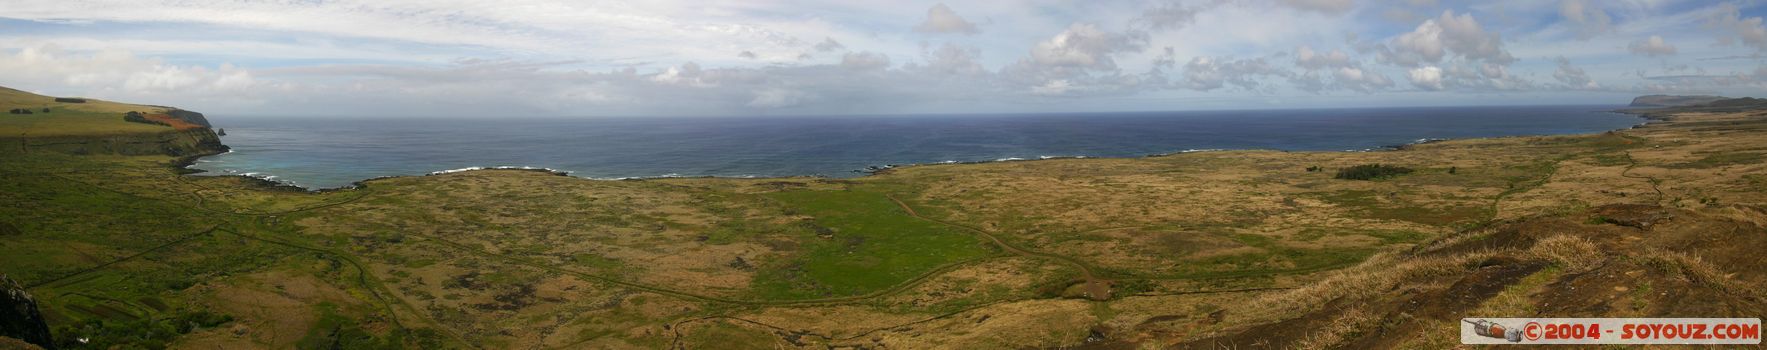 Ile de Paques - Rano Raraku - panorama
Mots-clés: chile Ile de Paques Easter Island patrimoine unesco panorama